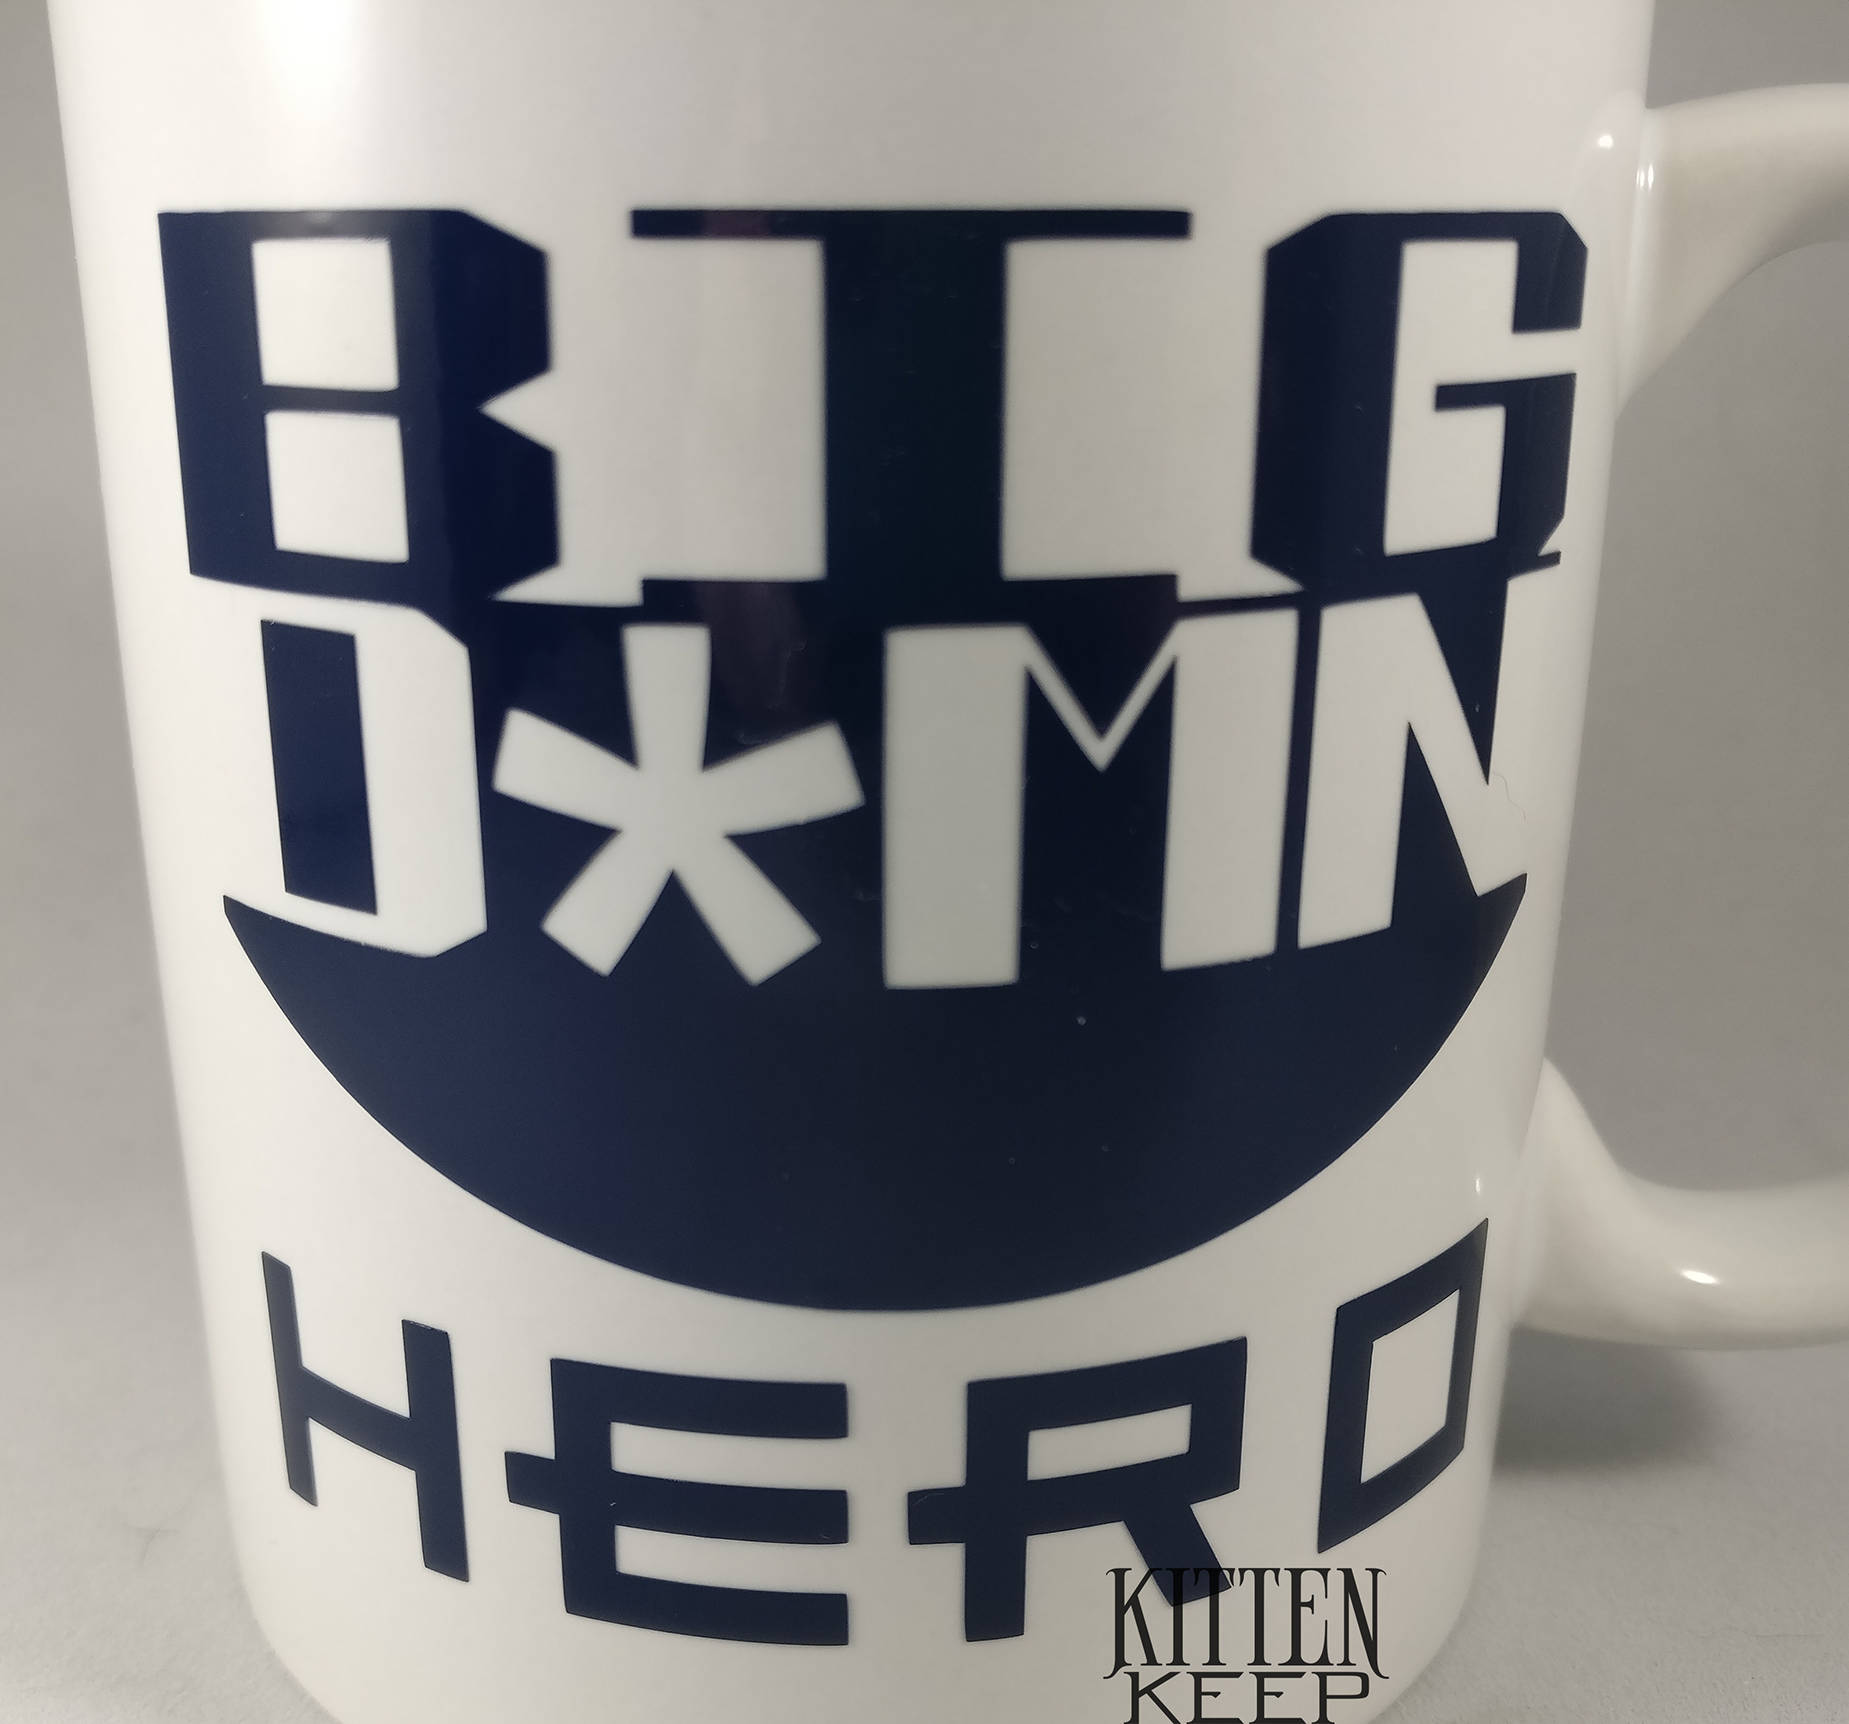 Big Damn Hero Coffee Mug | Firefly